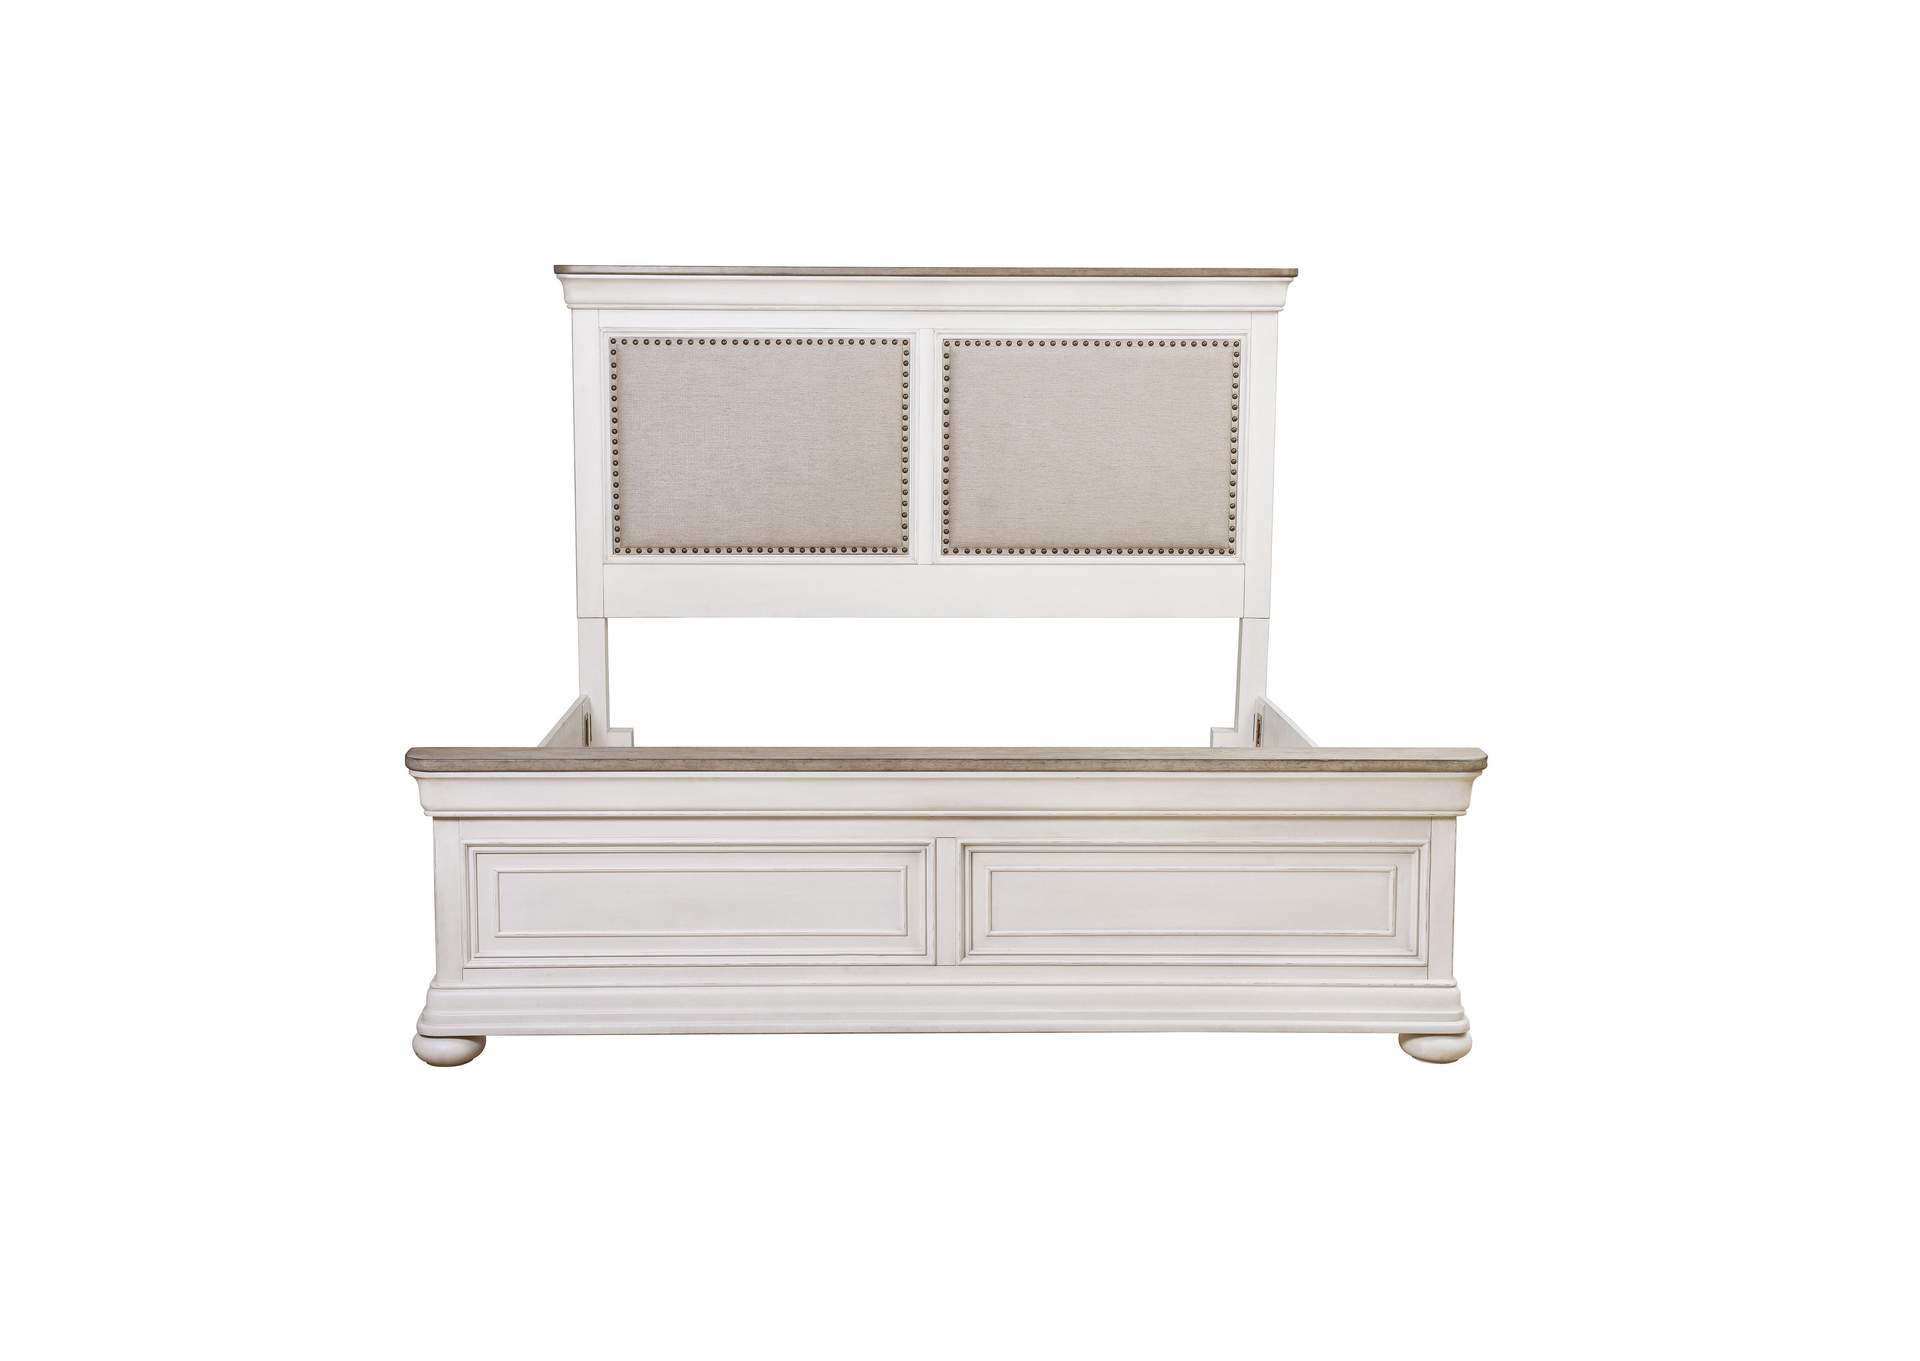 6 Piece Queen Bedroom Set - White,Pulaski Furniture